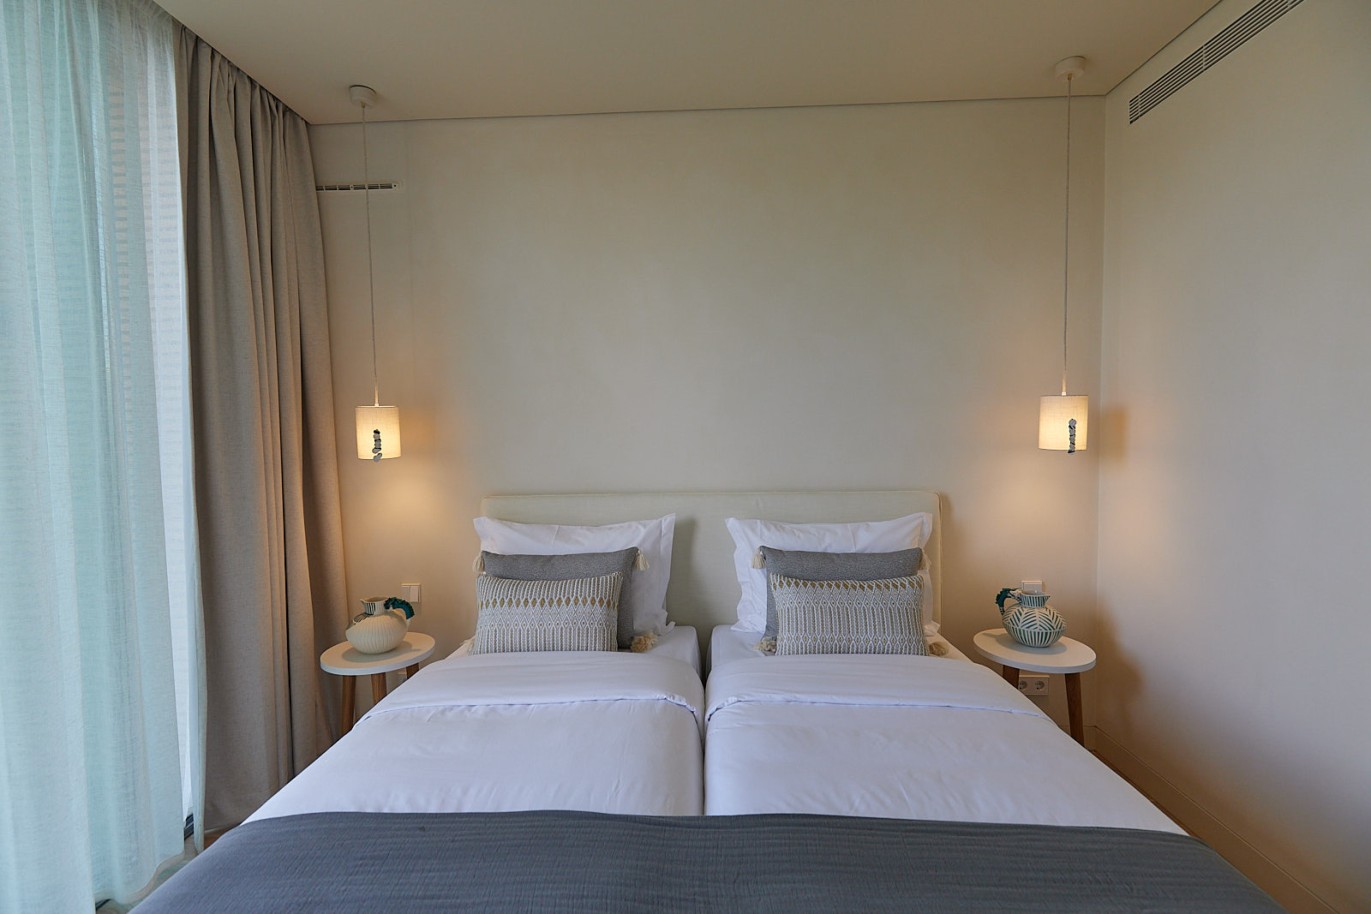 2 bedroom apartment in resort, for sale in Porches, Algarve_228834